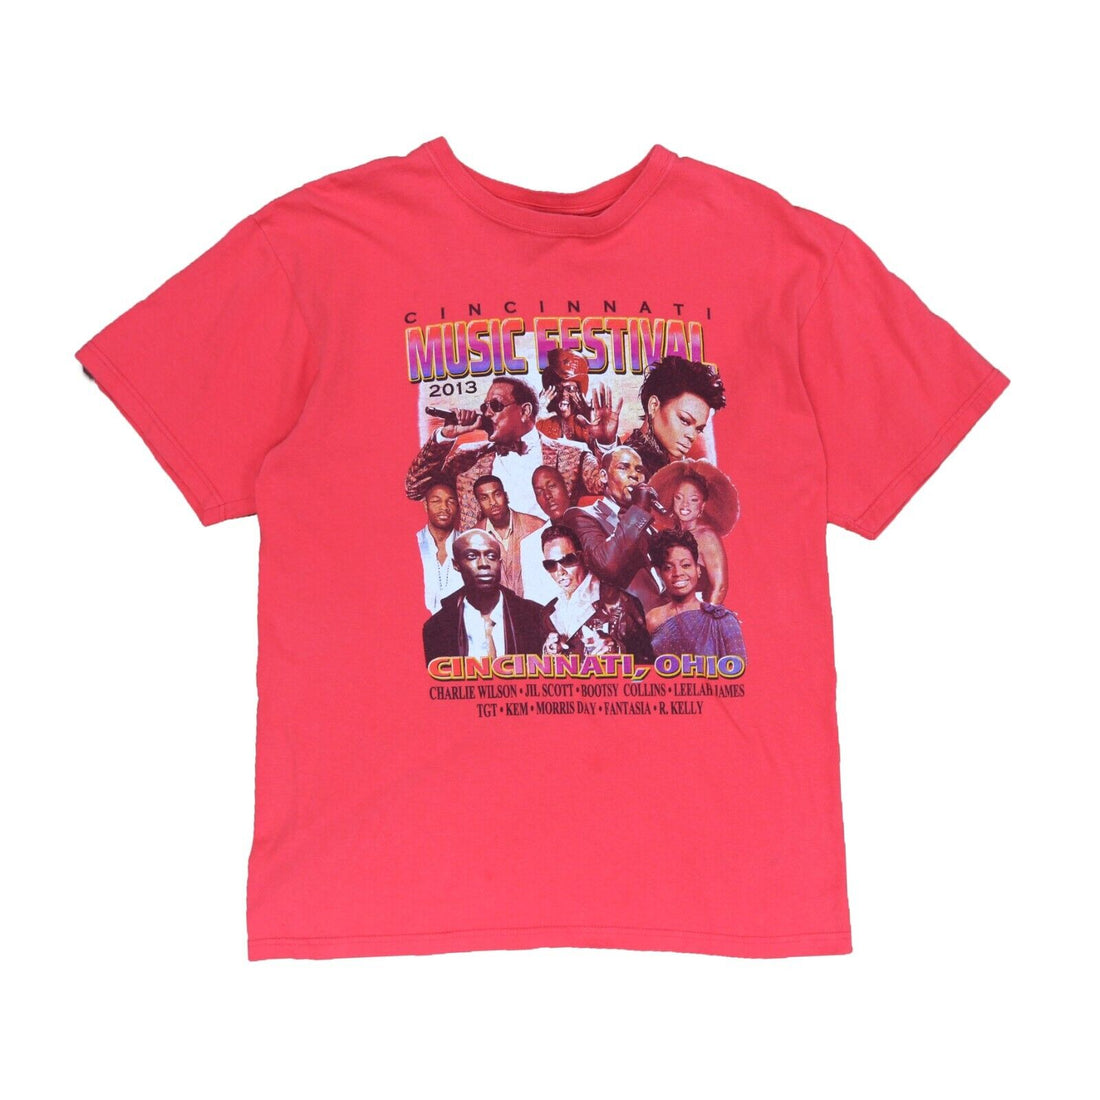 Cincinnati Music Festival T-Shirt Size Large Red 2013 Jil Scott R Kelly Fantasia